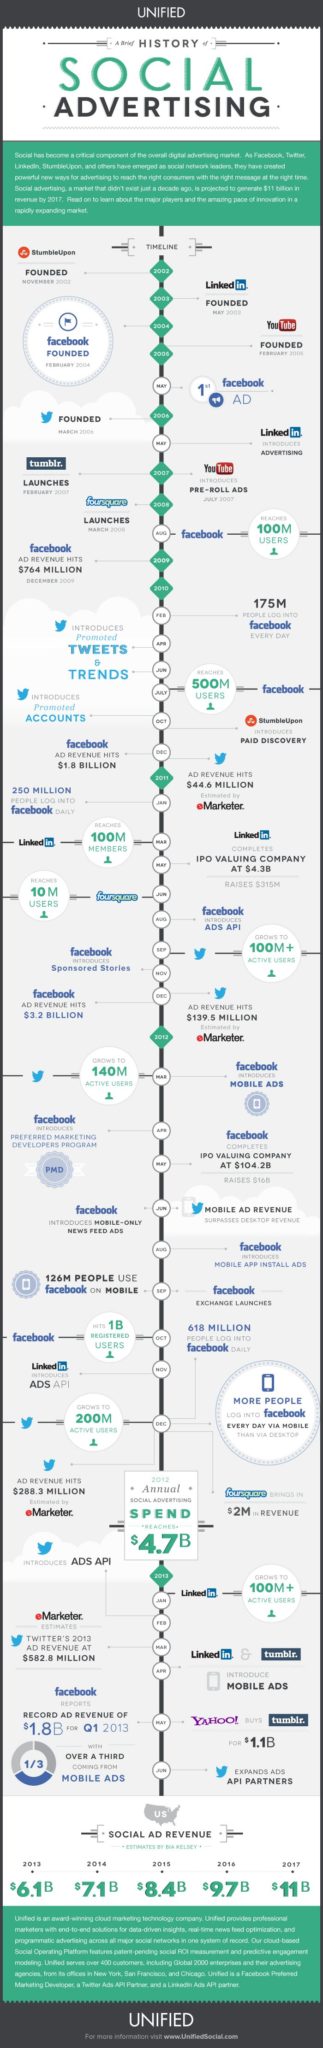 social media history infographic